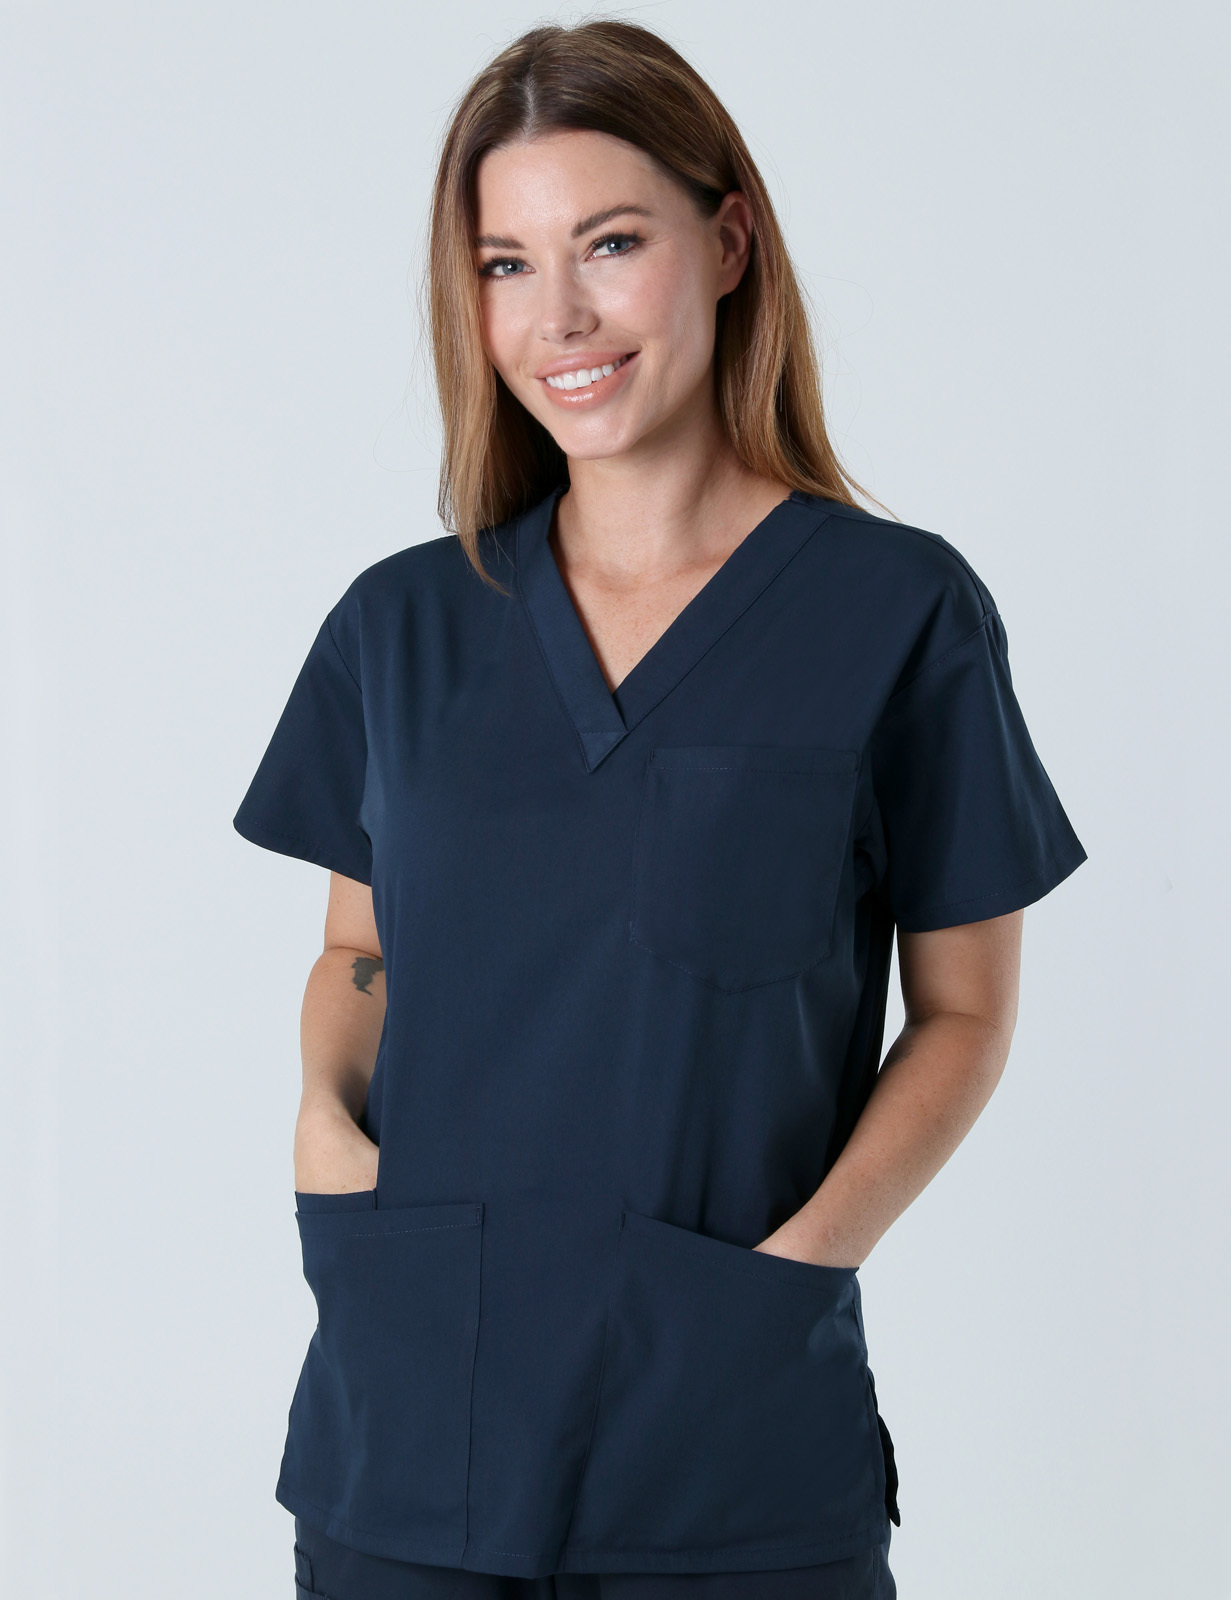 Dandenong Outpatient - Nurse (4 Pocket Scrub Top in Navy incl Logos)